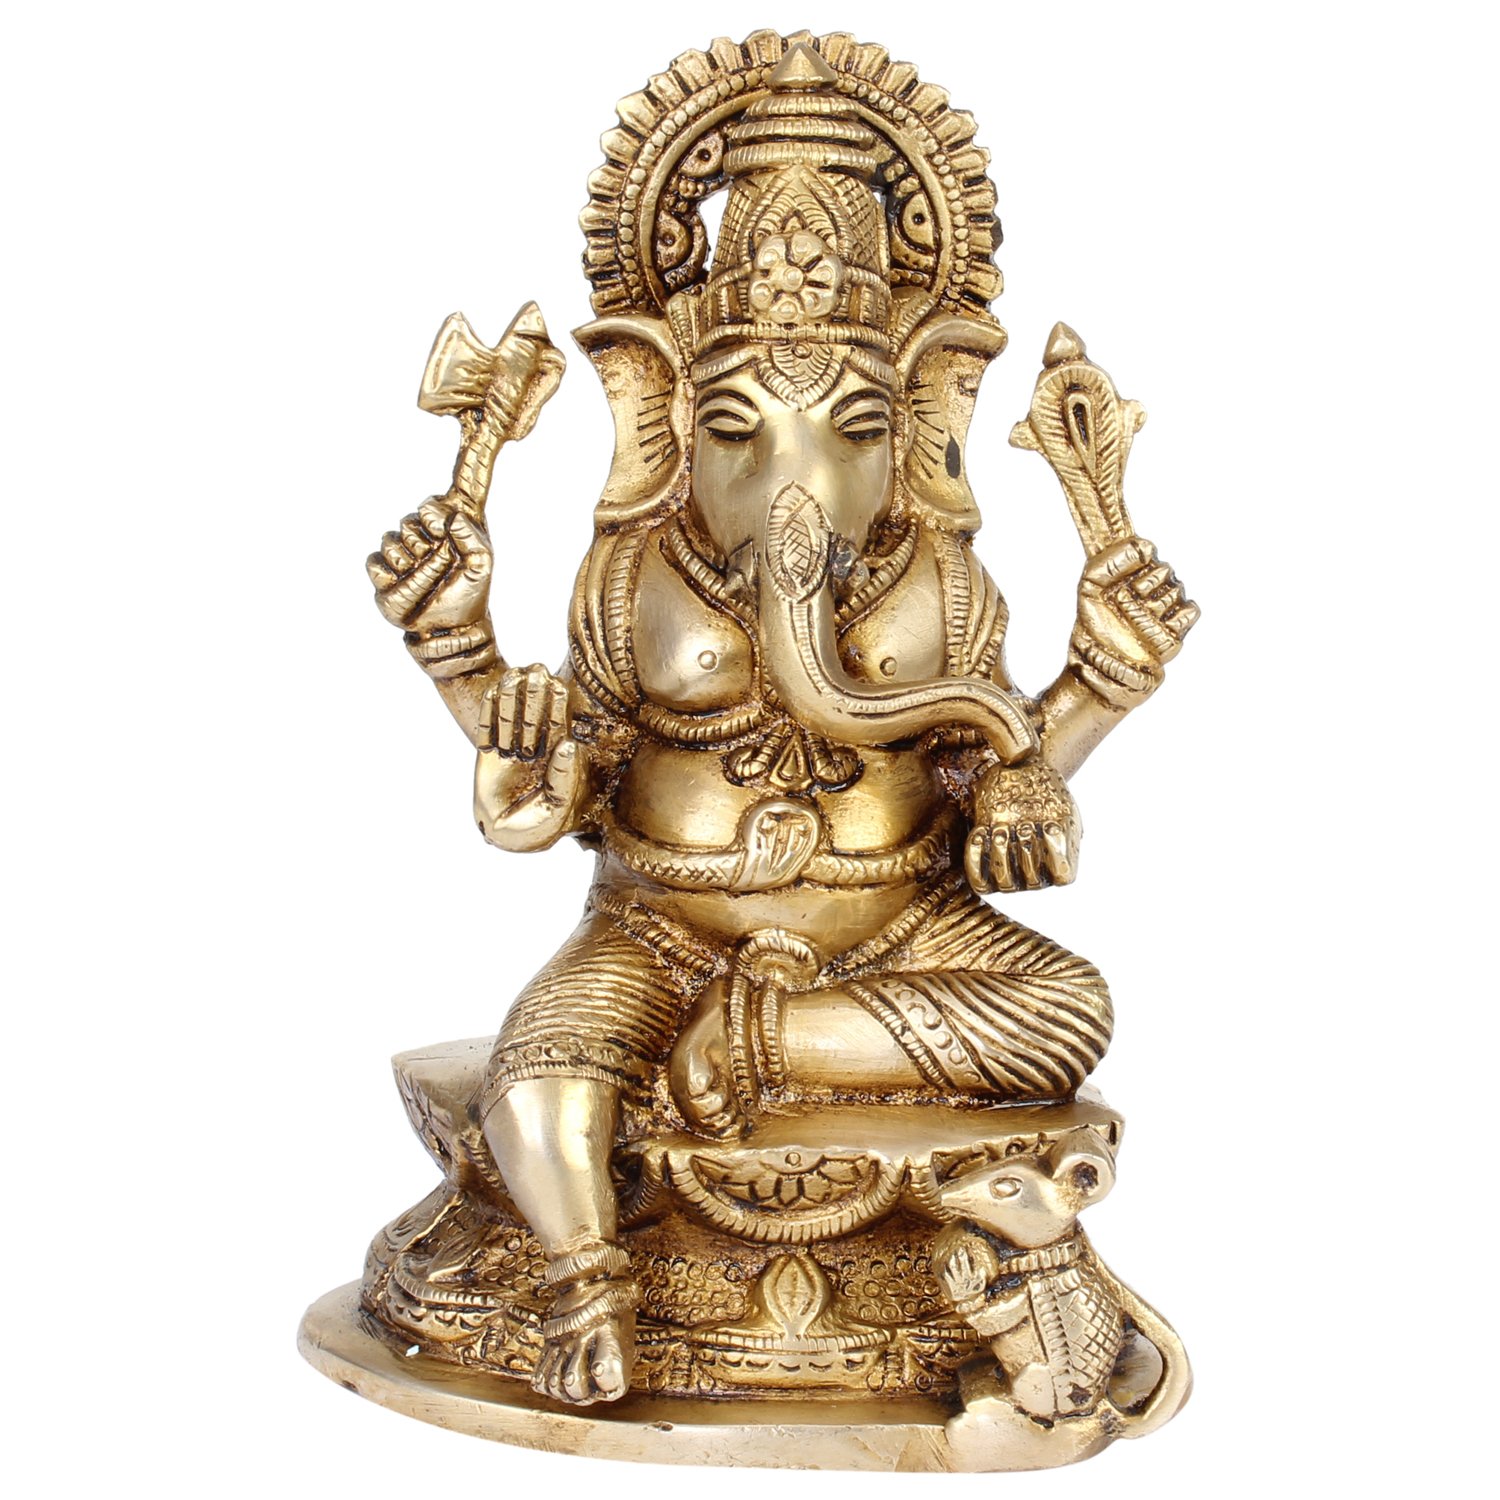 Buy Ganedsh Ji Polyresin Statues, Idols and Showpiece Online